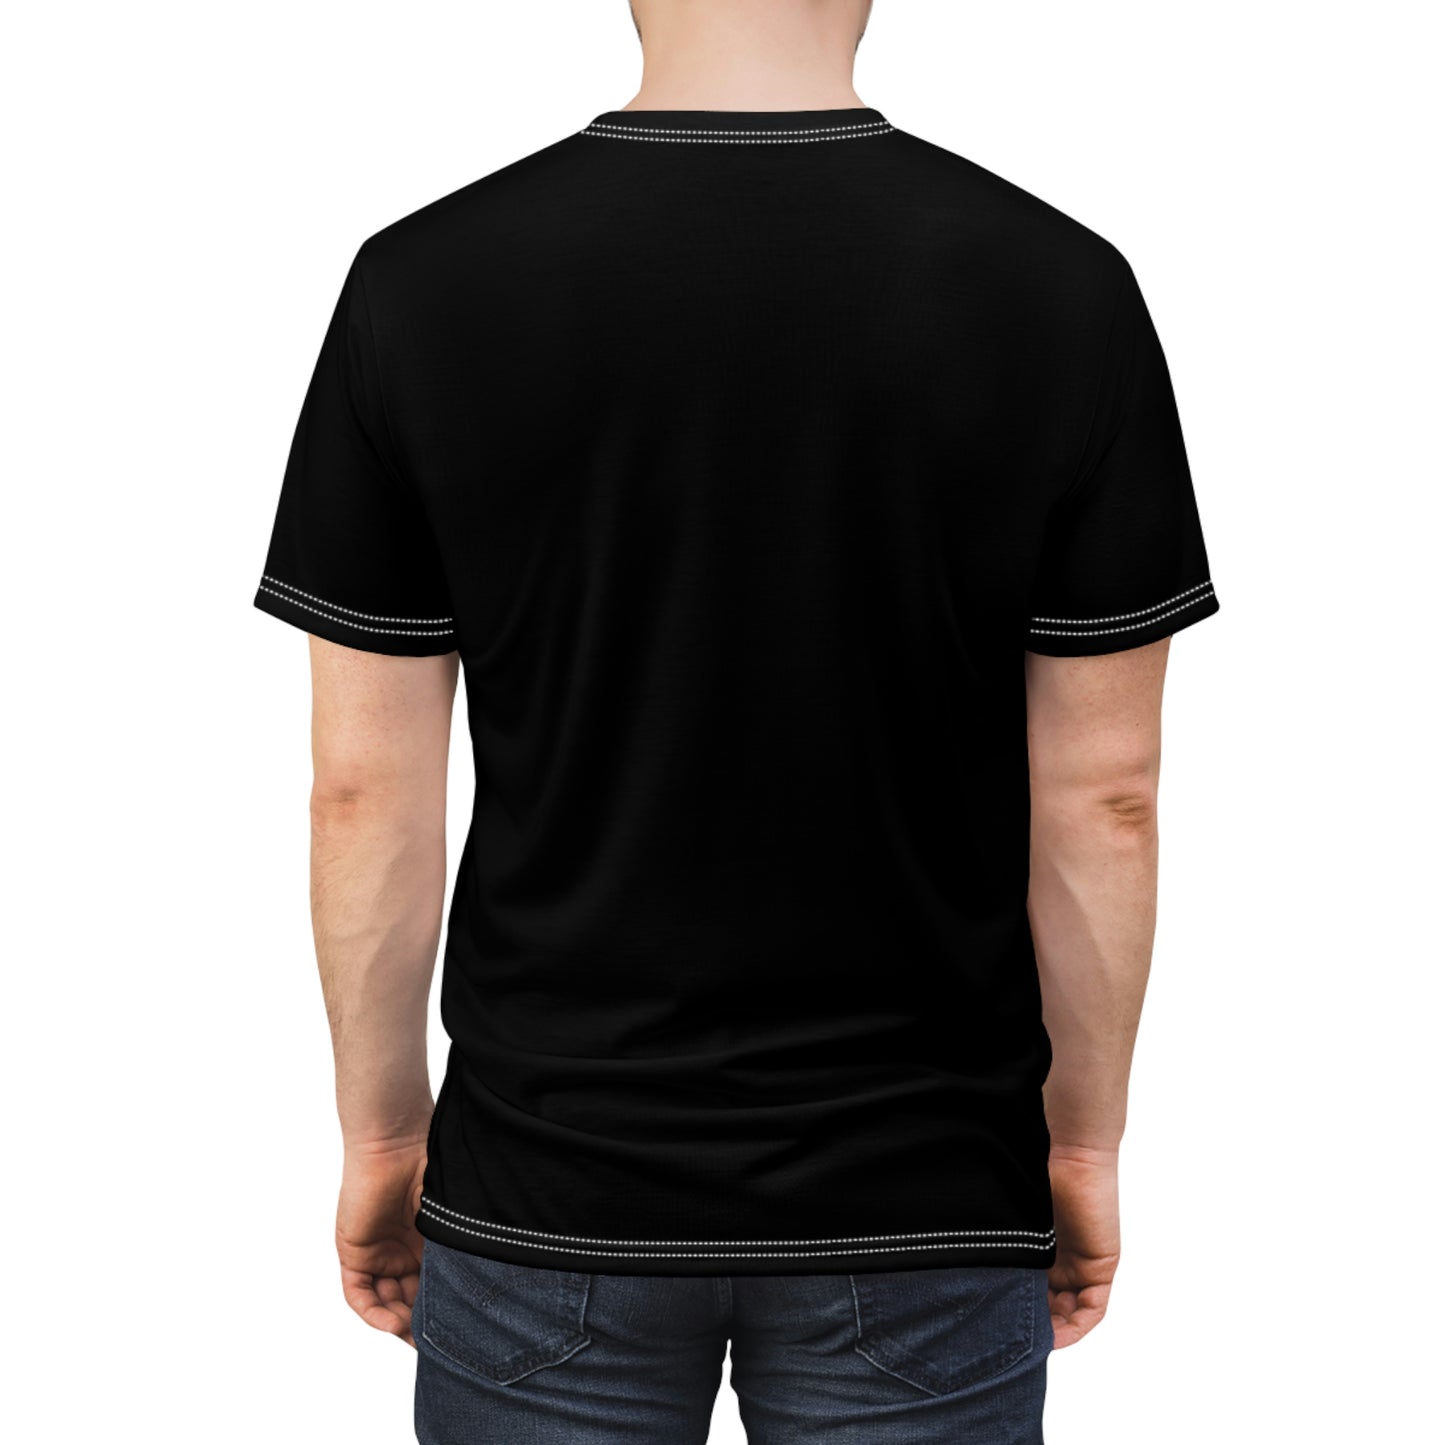 Fragile Hope - Unisex All-Over Print Cut & Sew T-Shirt